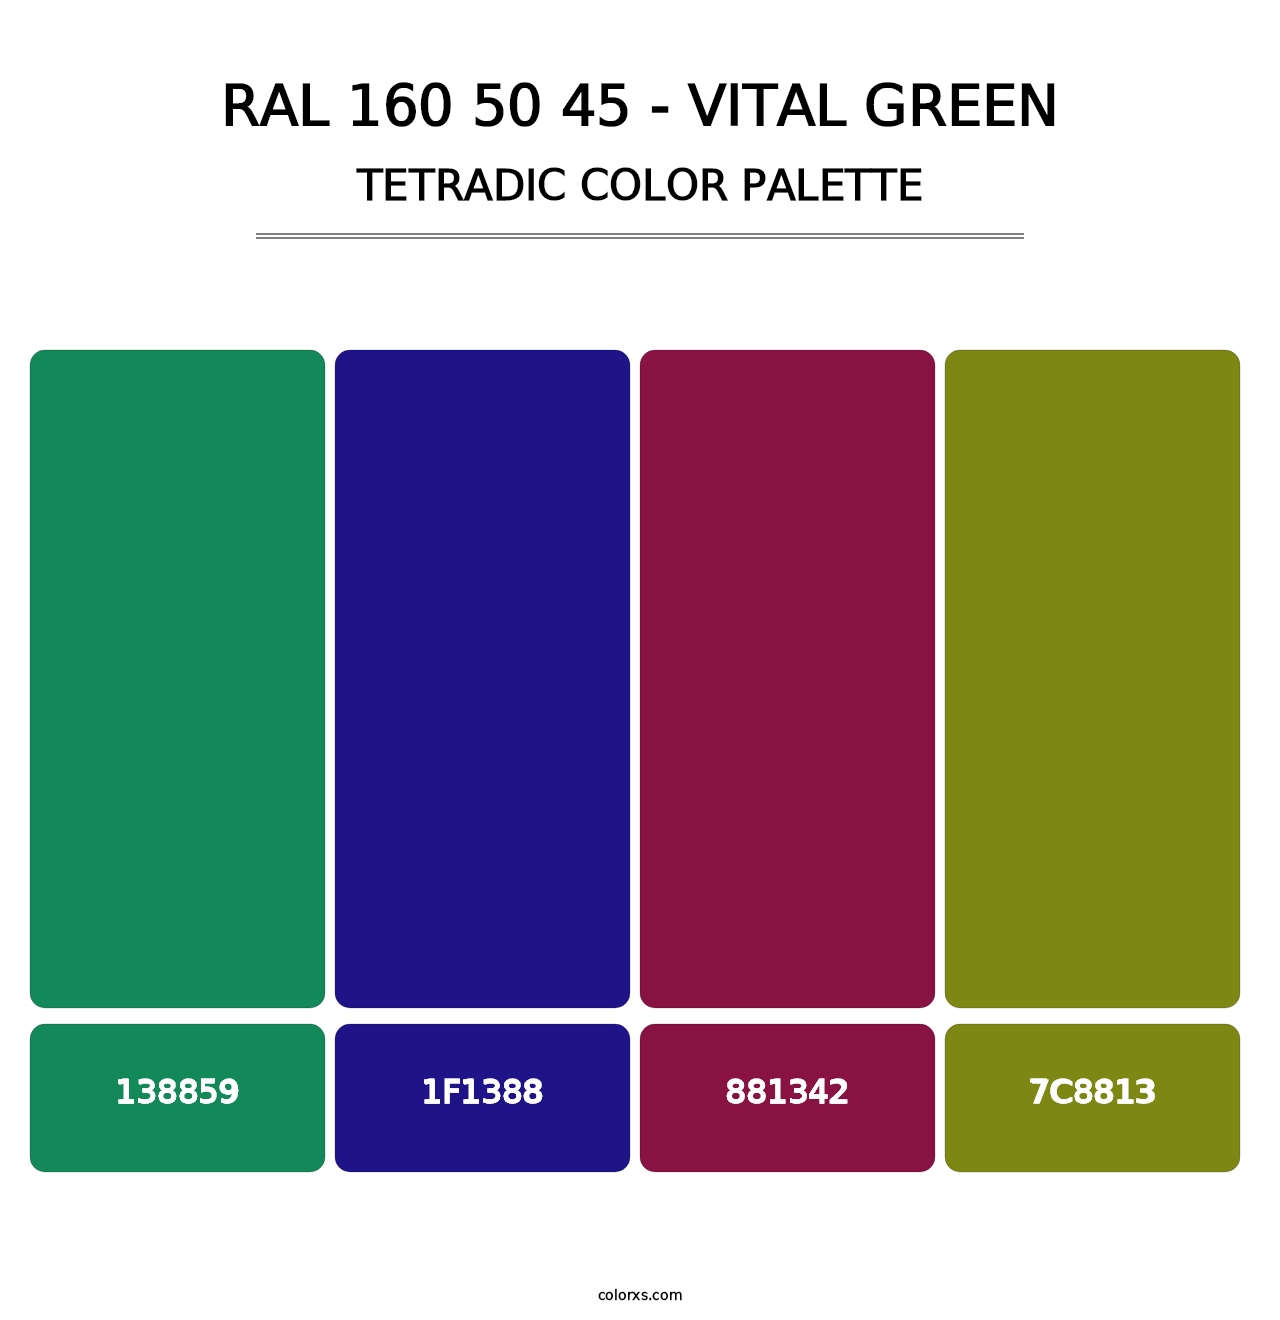 RAL 160 50 45 - Vital Green - Tetradic Color Palette